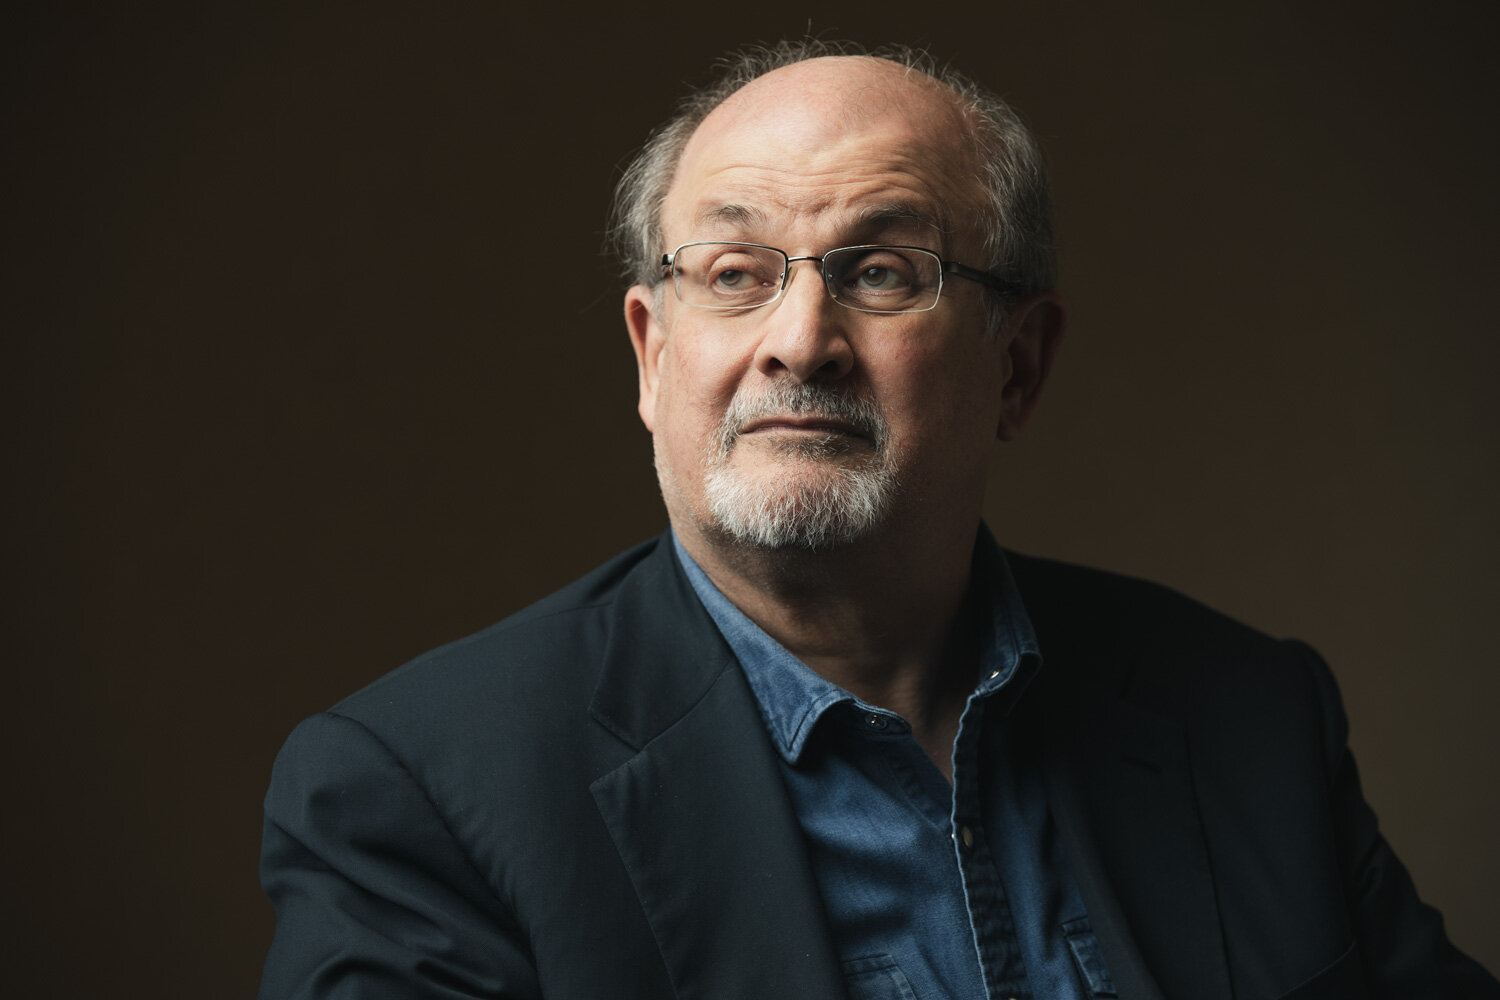  NEW YORK CITY 2018 09 26 Salman Rushdie, British Indian novelist and essayist. 